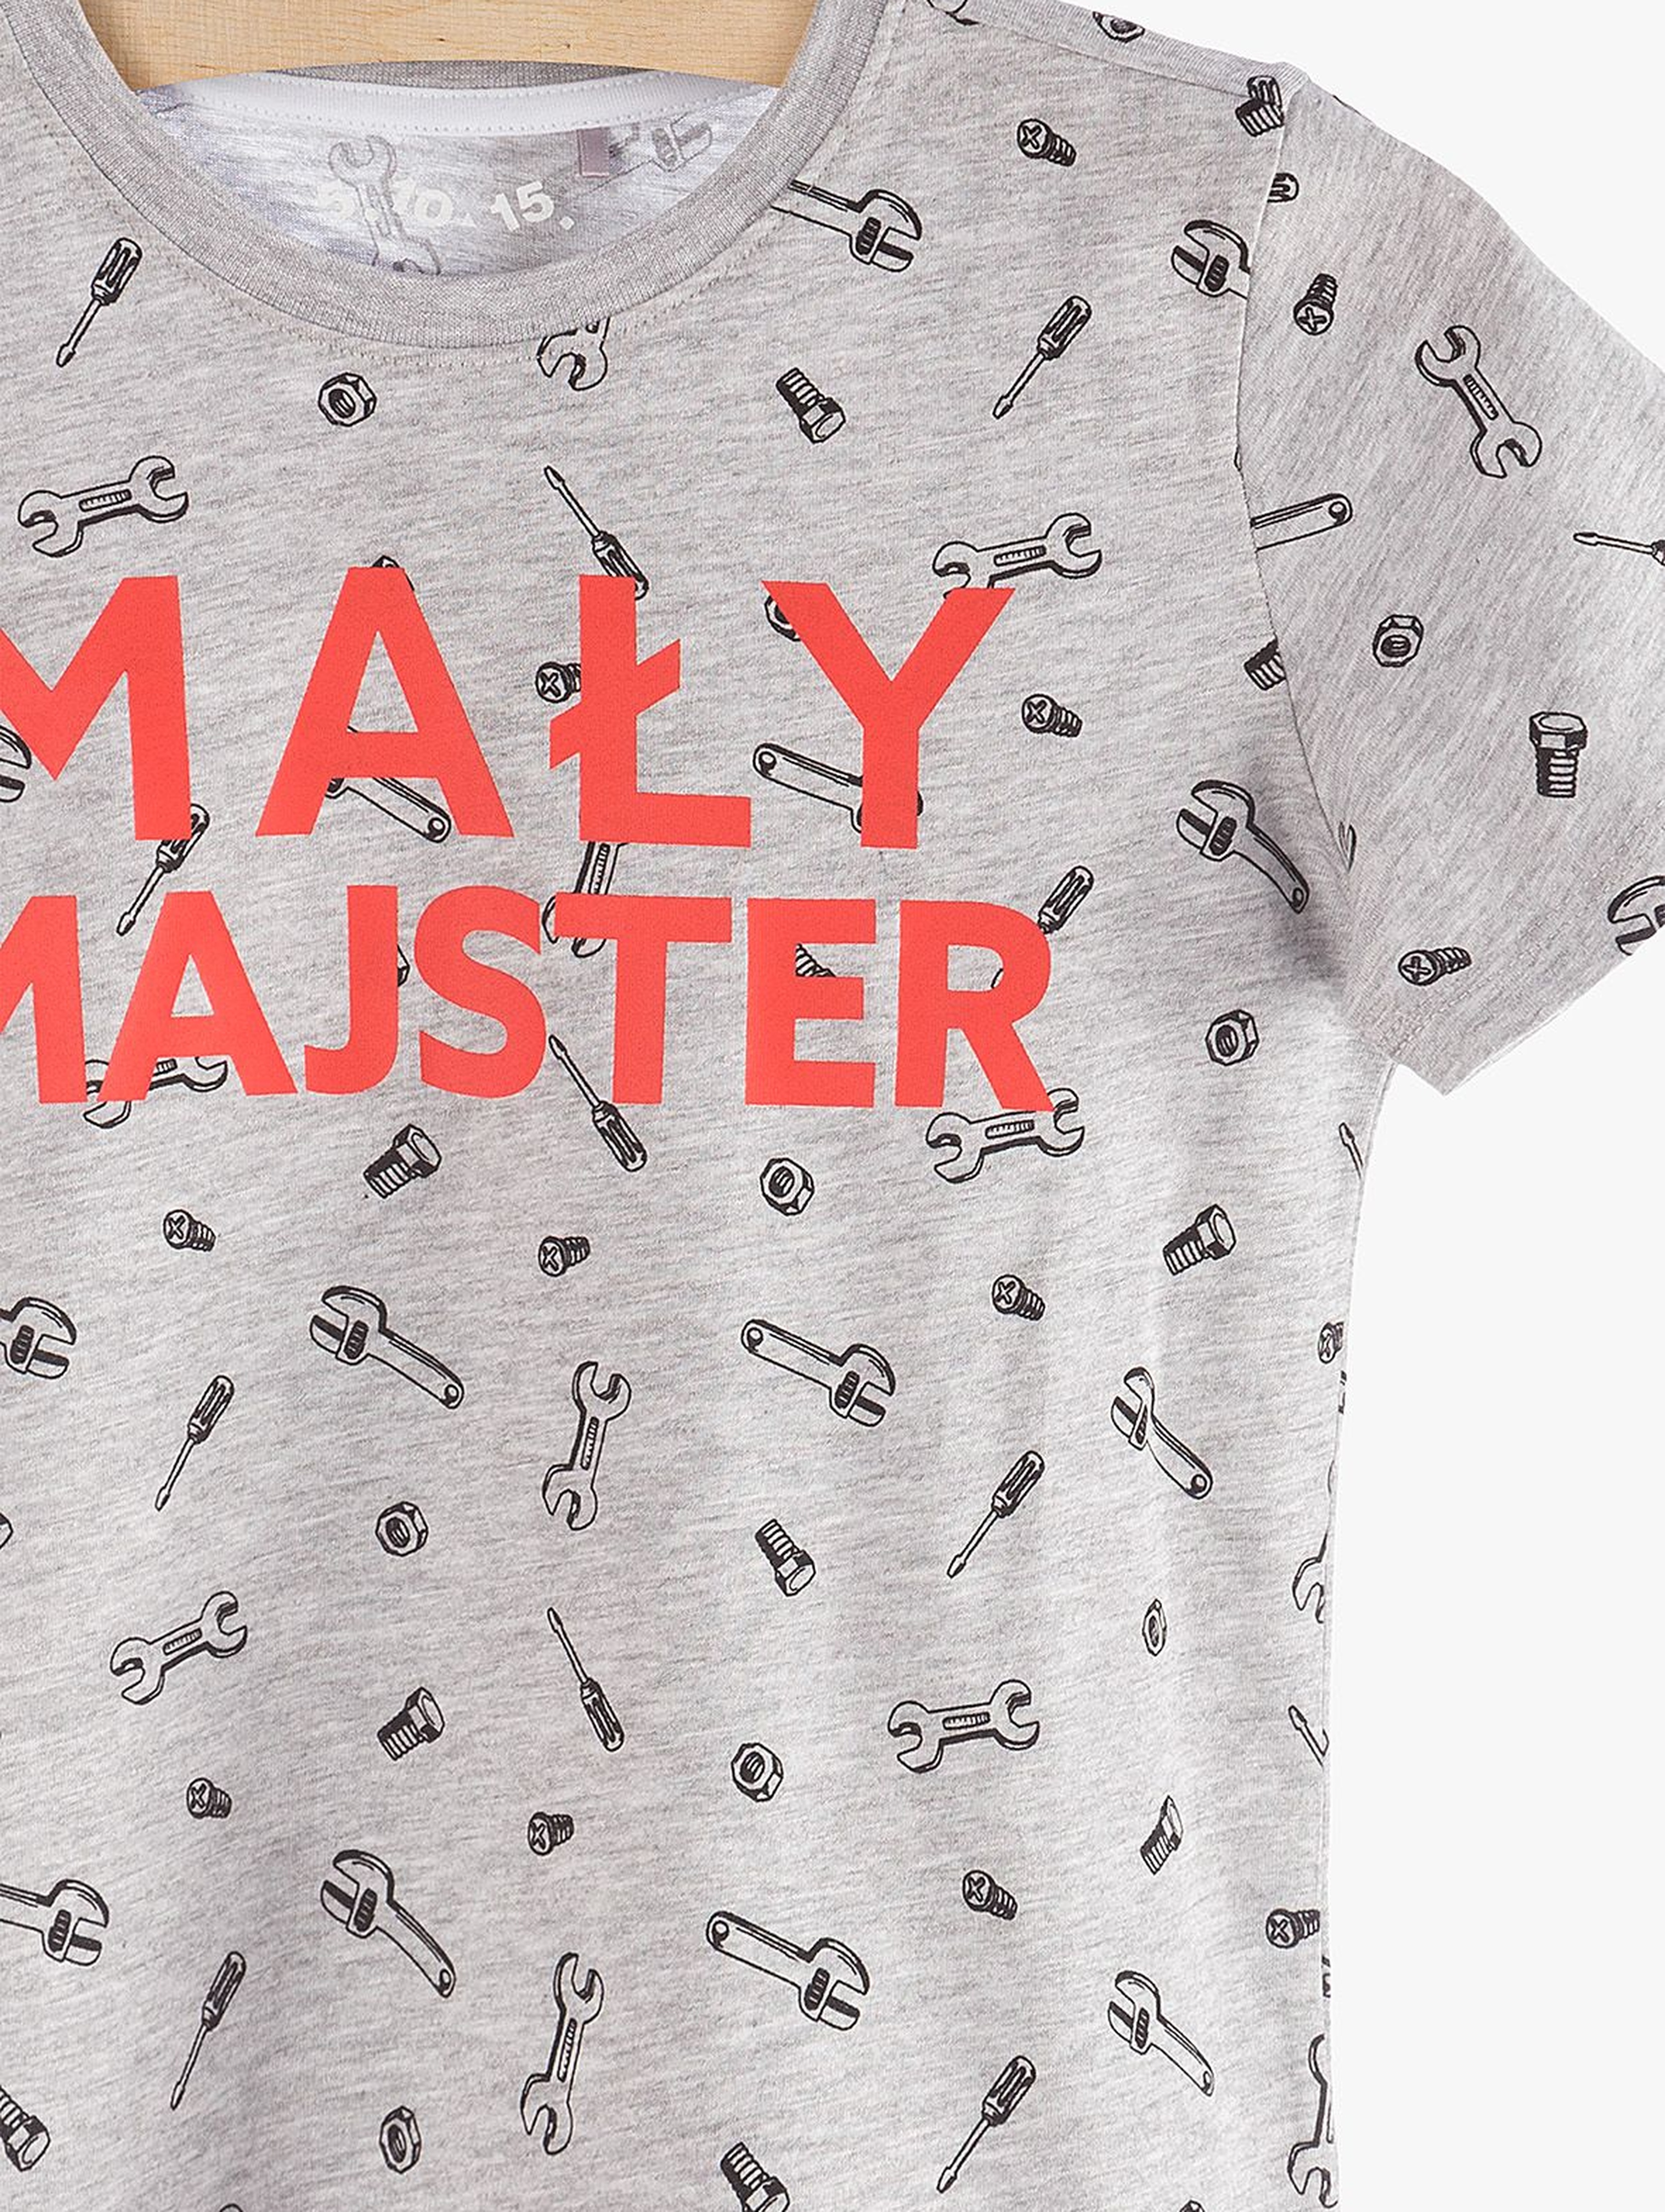 T-shirt dla chłopca "Mały Majster"